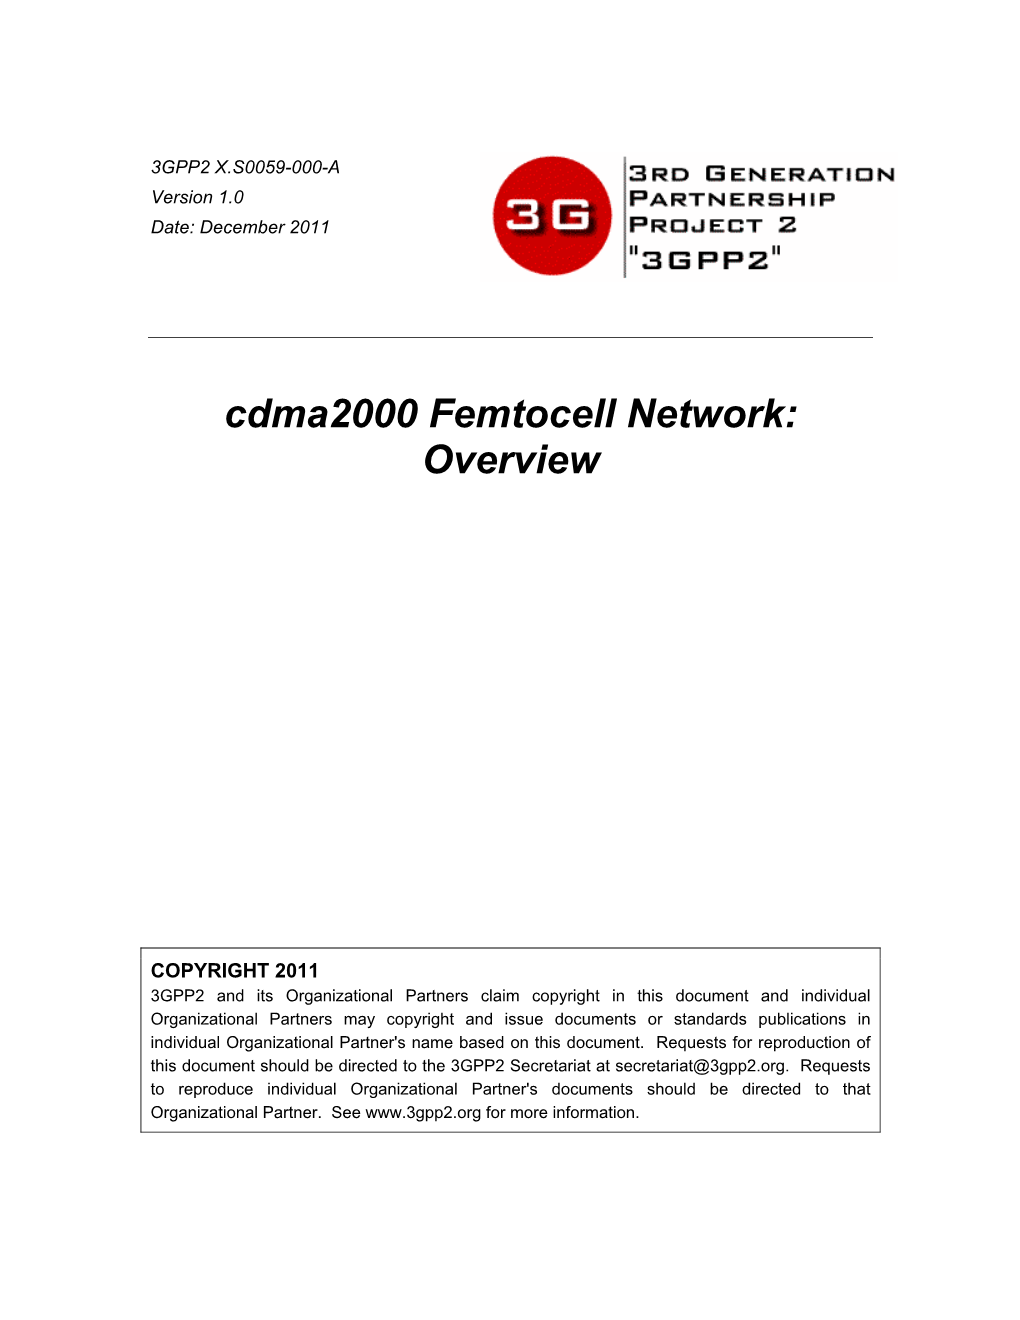 Cdma2000 Femtocell Network: Overview